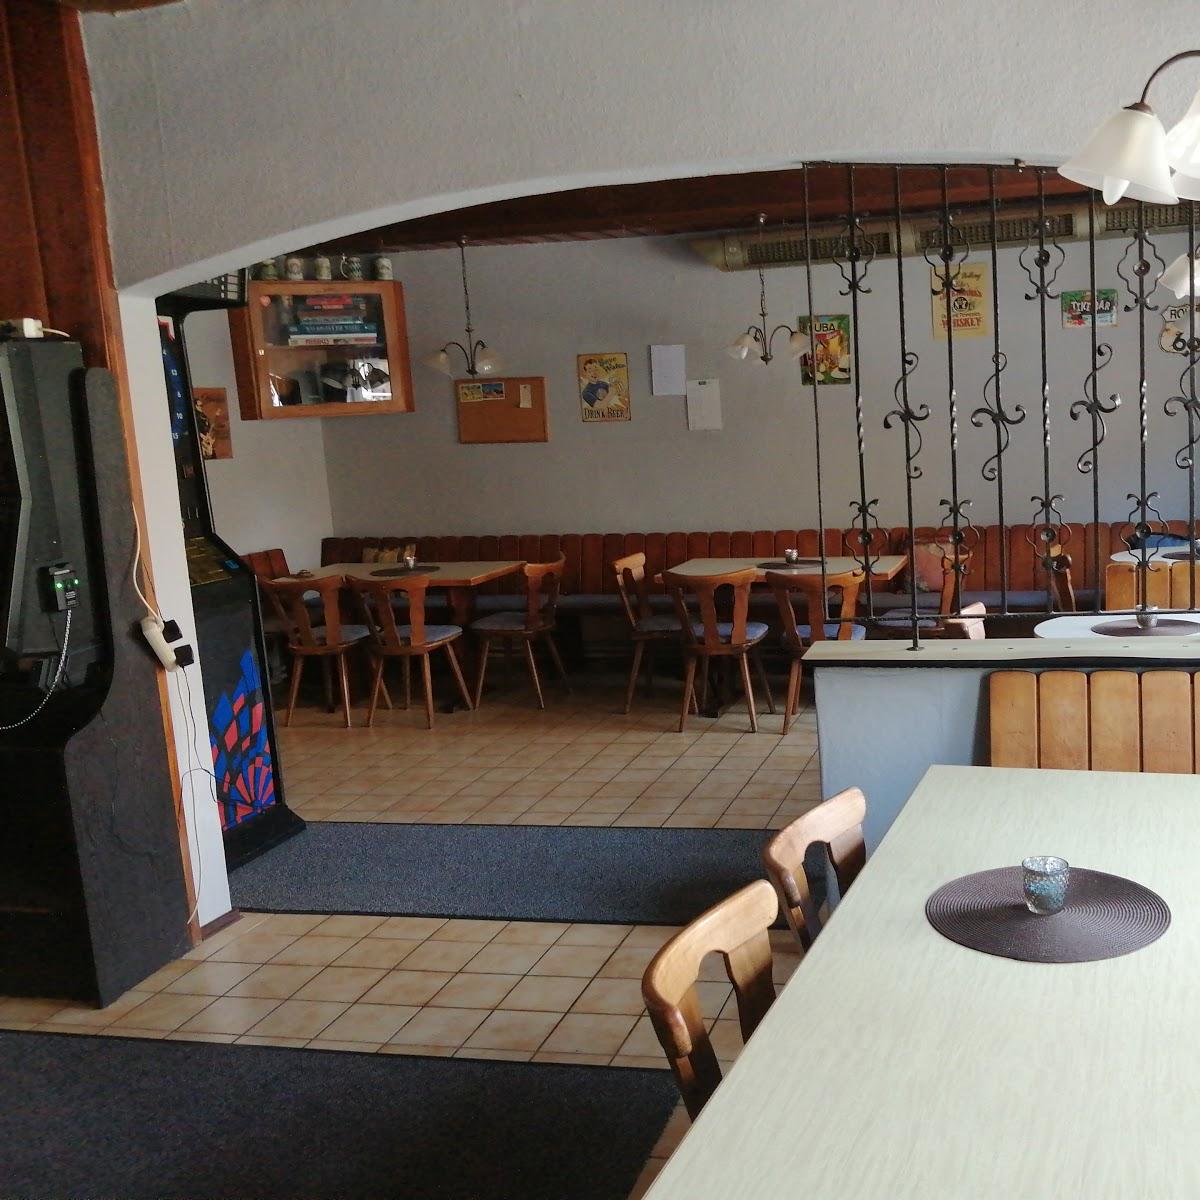 Restaurant "Roni’s Pizzaservice" in  Pförring